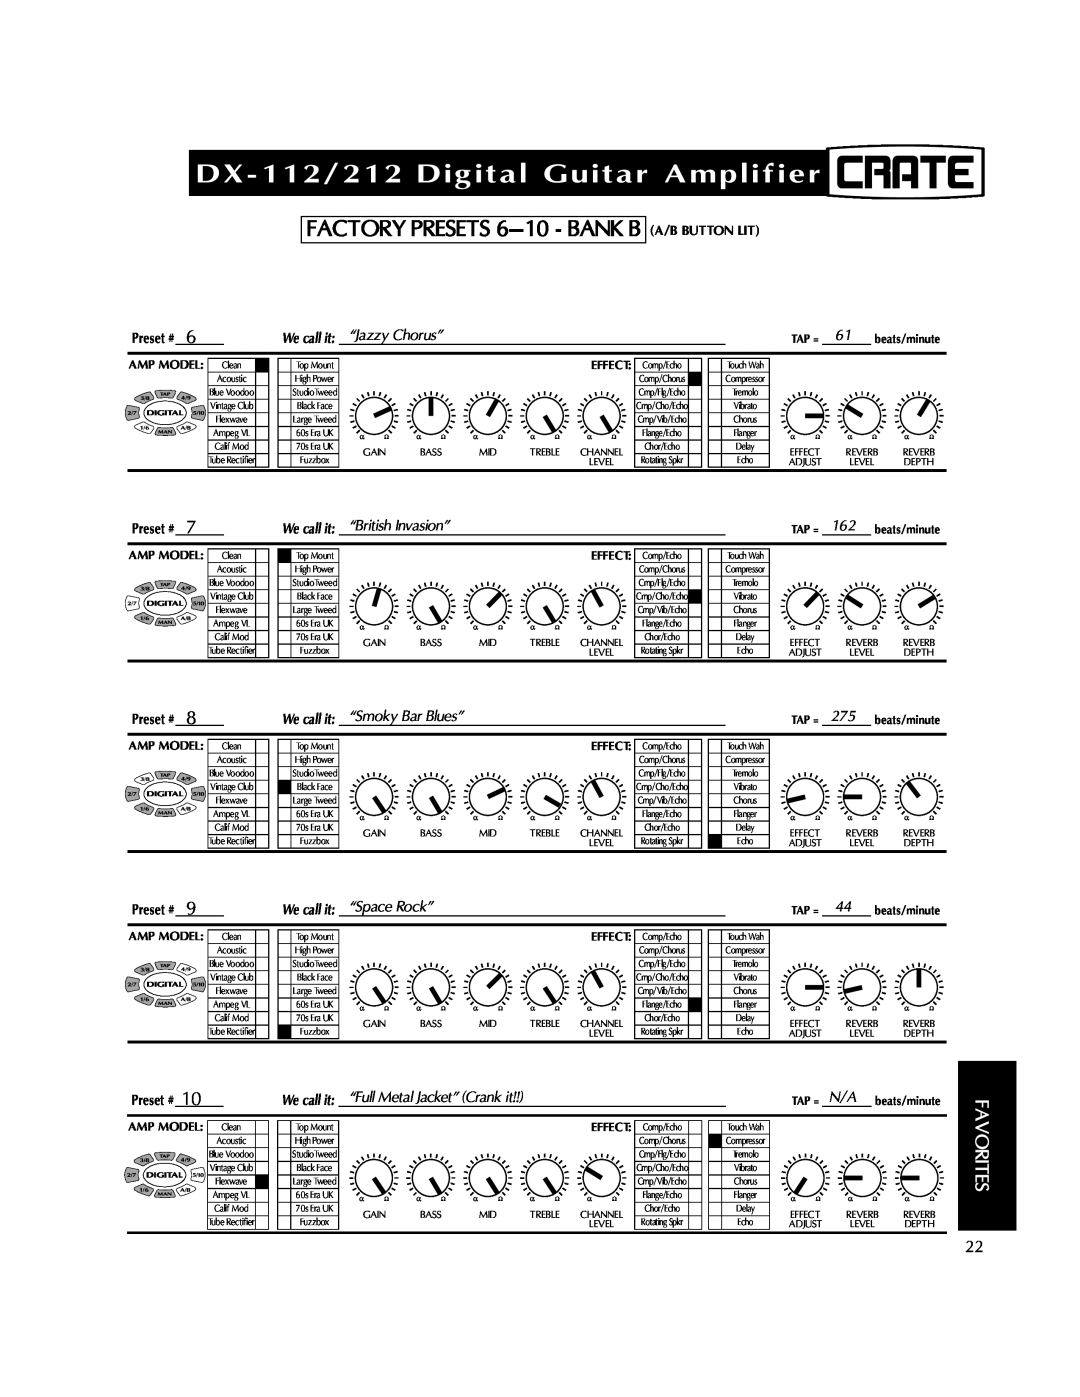 Crate Amplifiers DX-212 manual DX-112/212Digital Guitar Amplifier, FACTORY PRESETS 6-10- BANK B, Favorites, “Jazzy Chorus” 